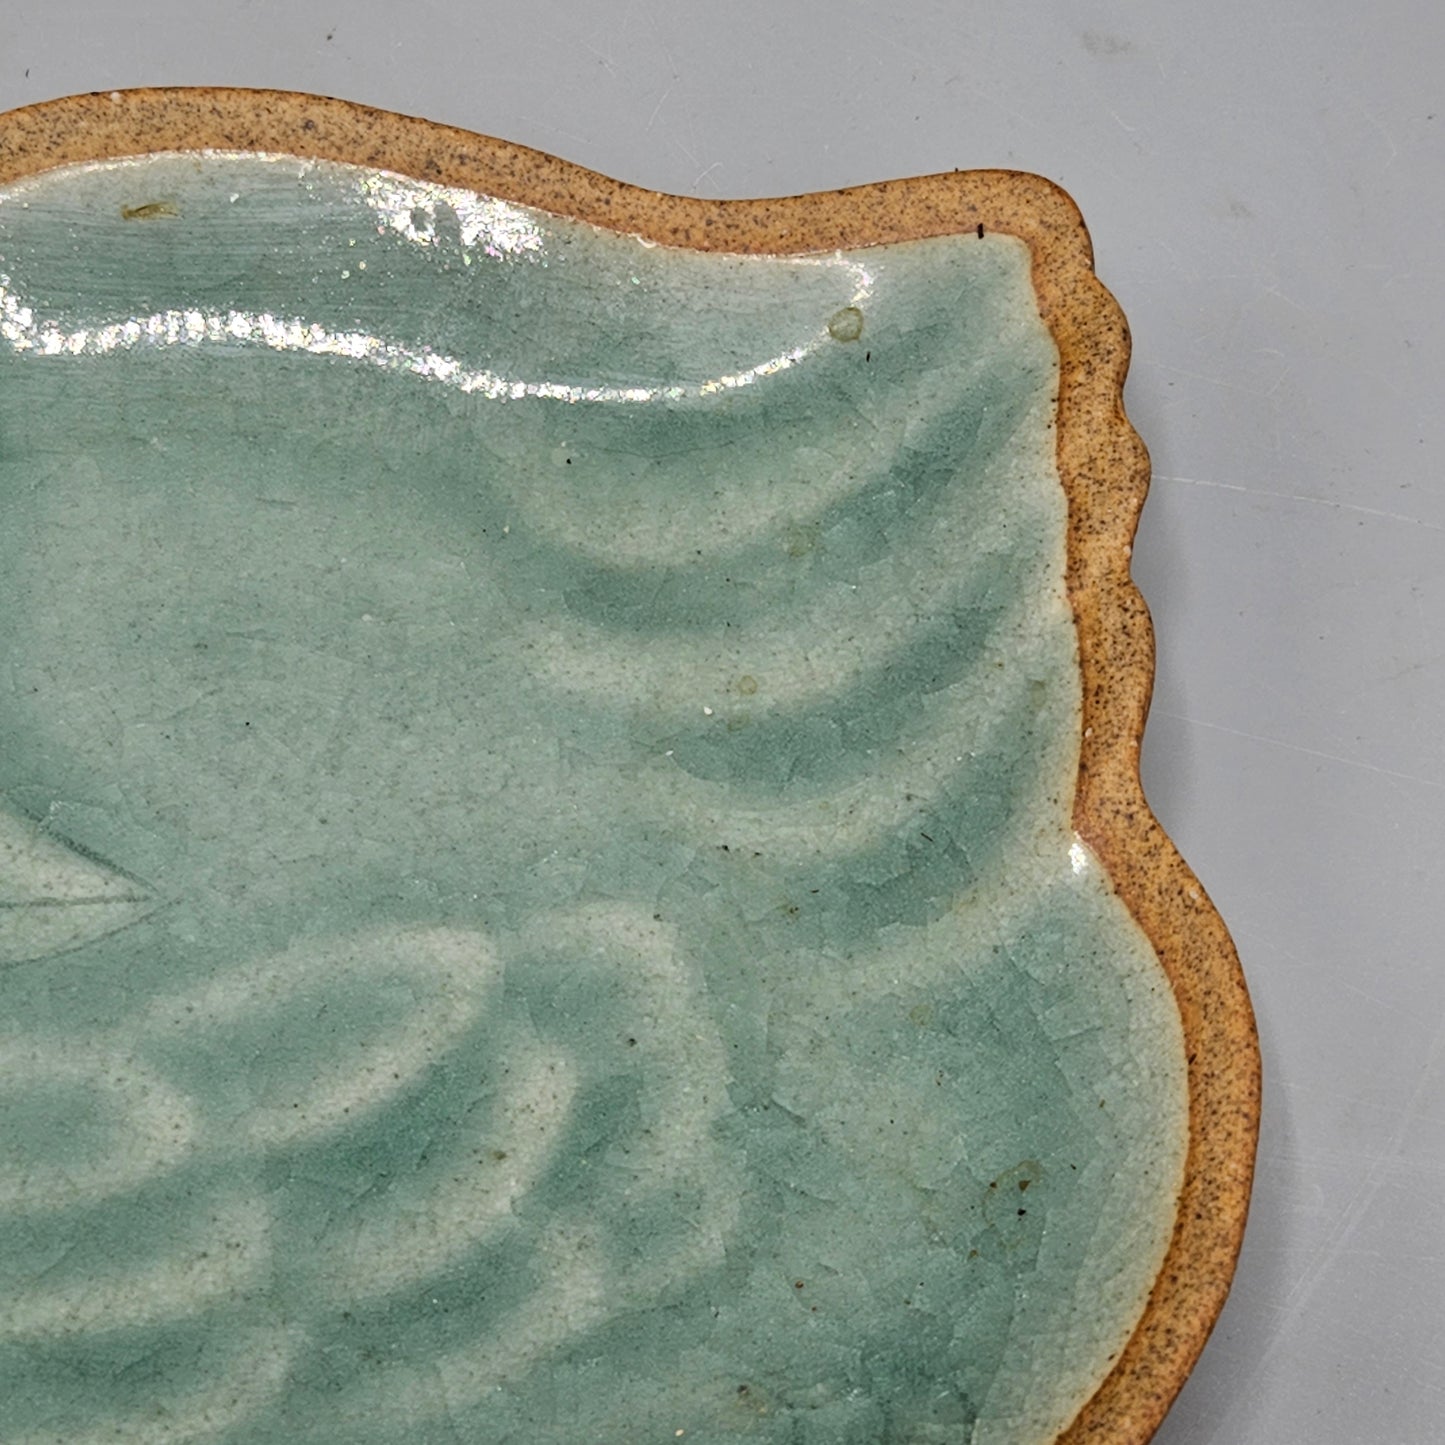 Thailand Pottery Celadon Glazed Duck Tray